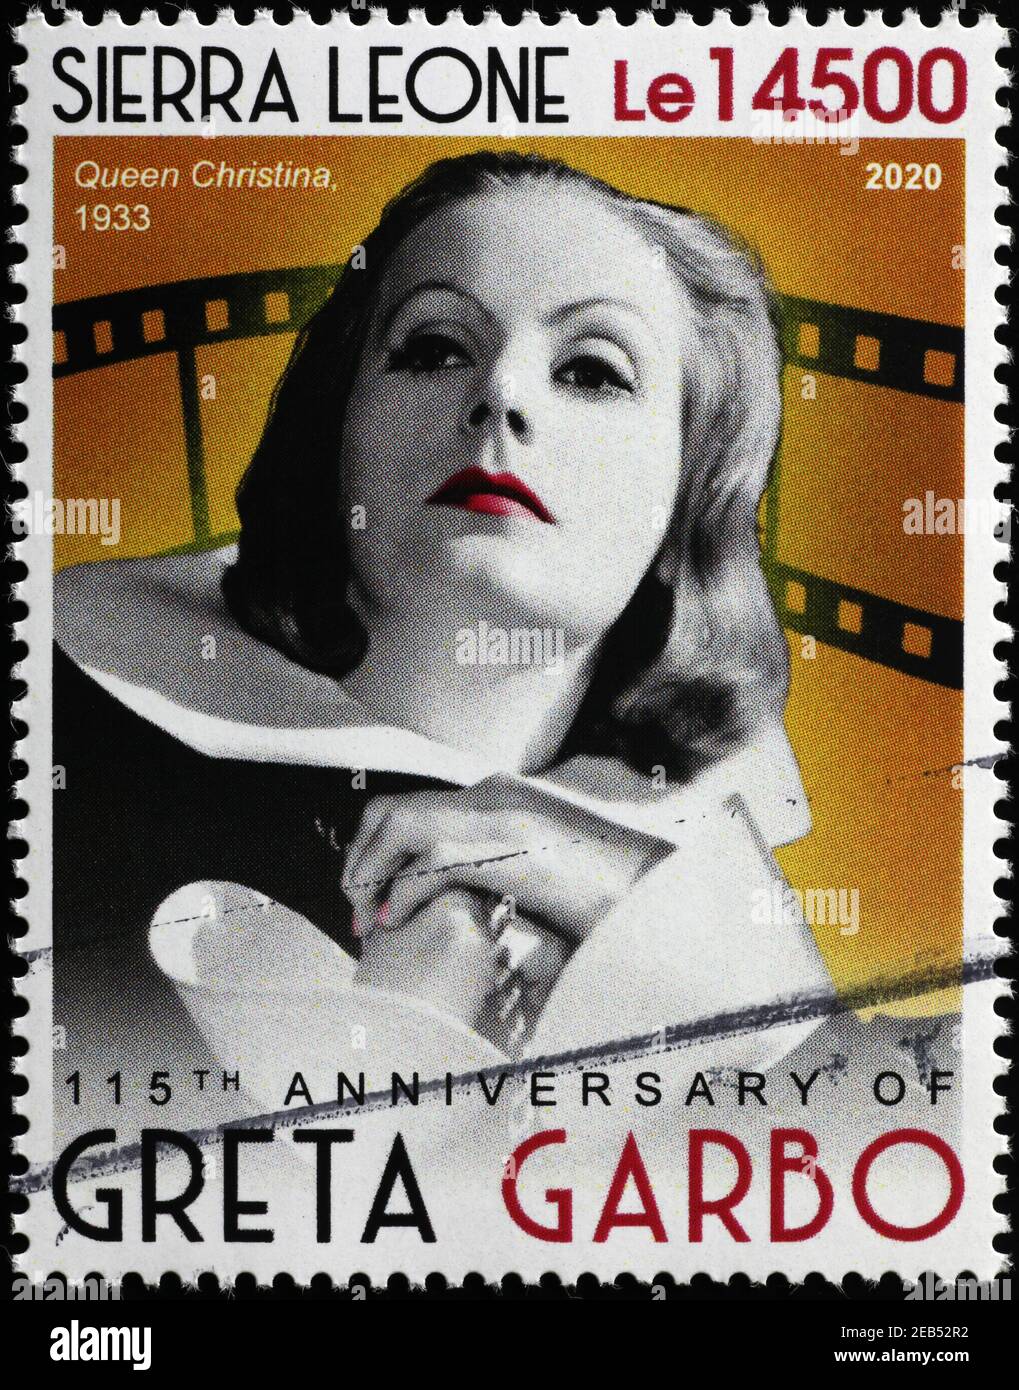 Diva Greta Garbo on postage stamp Stock Photo